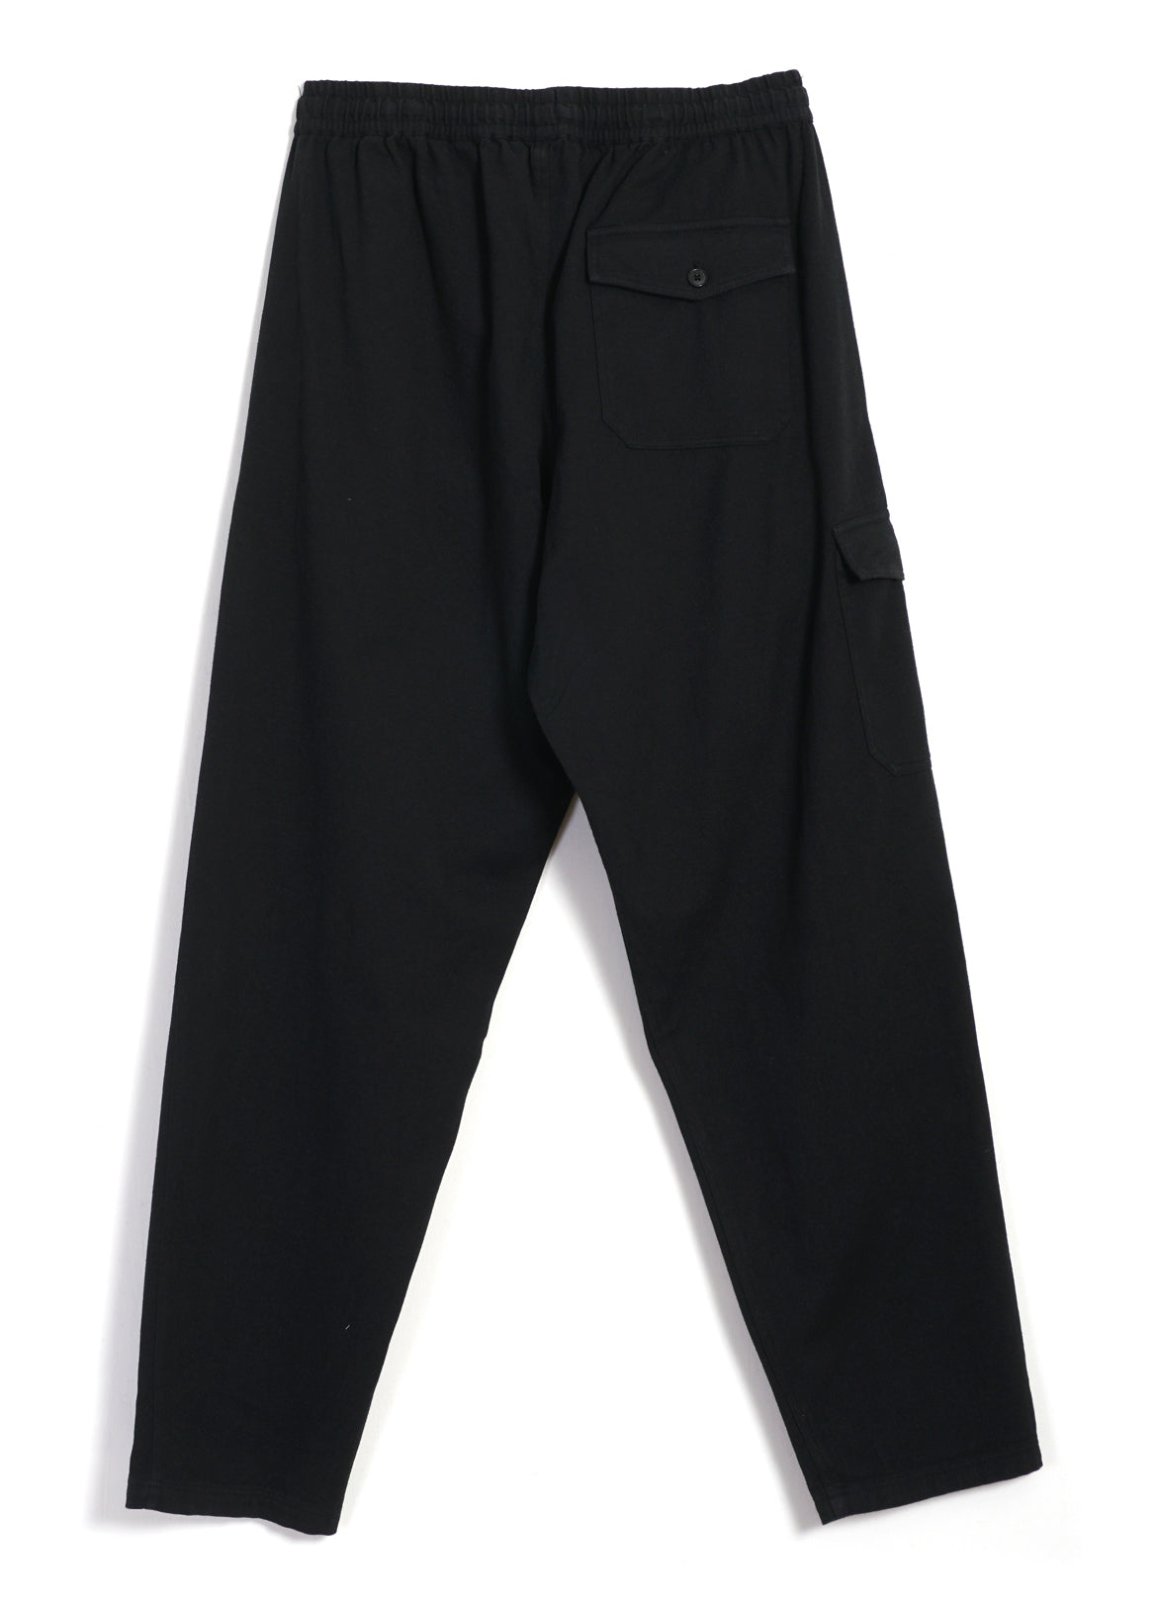 HANSEN GARMENTS - JIMMY | Casual Cargo Drawstring Pants | Black - HANSEN Garments